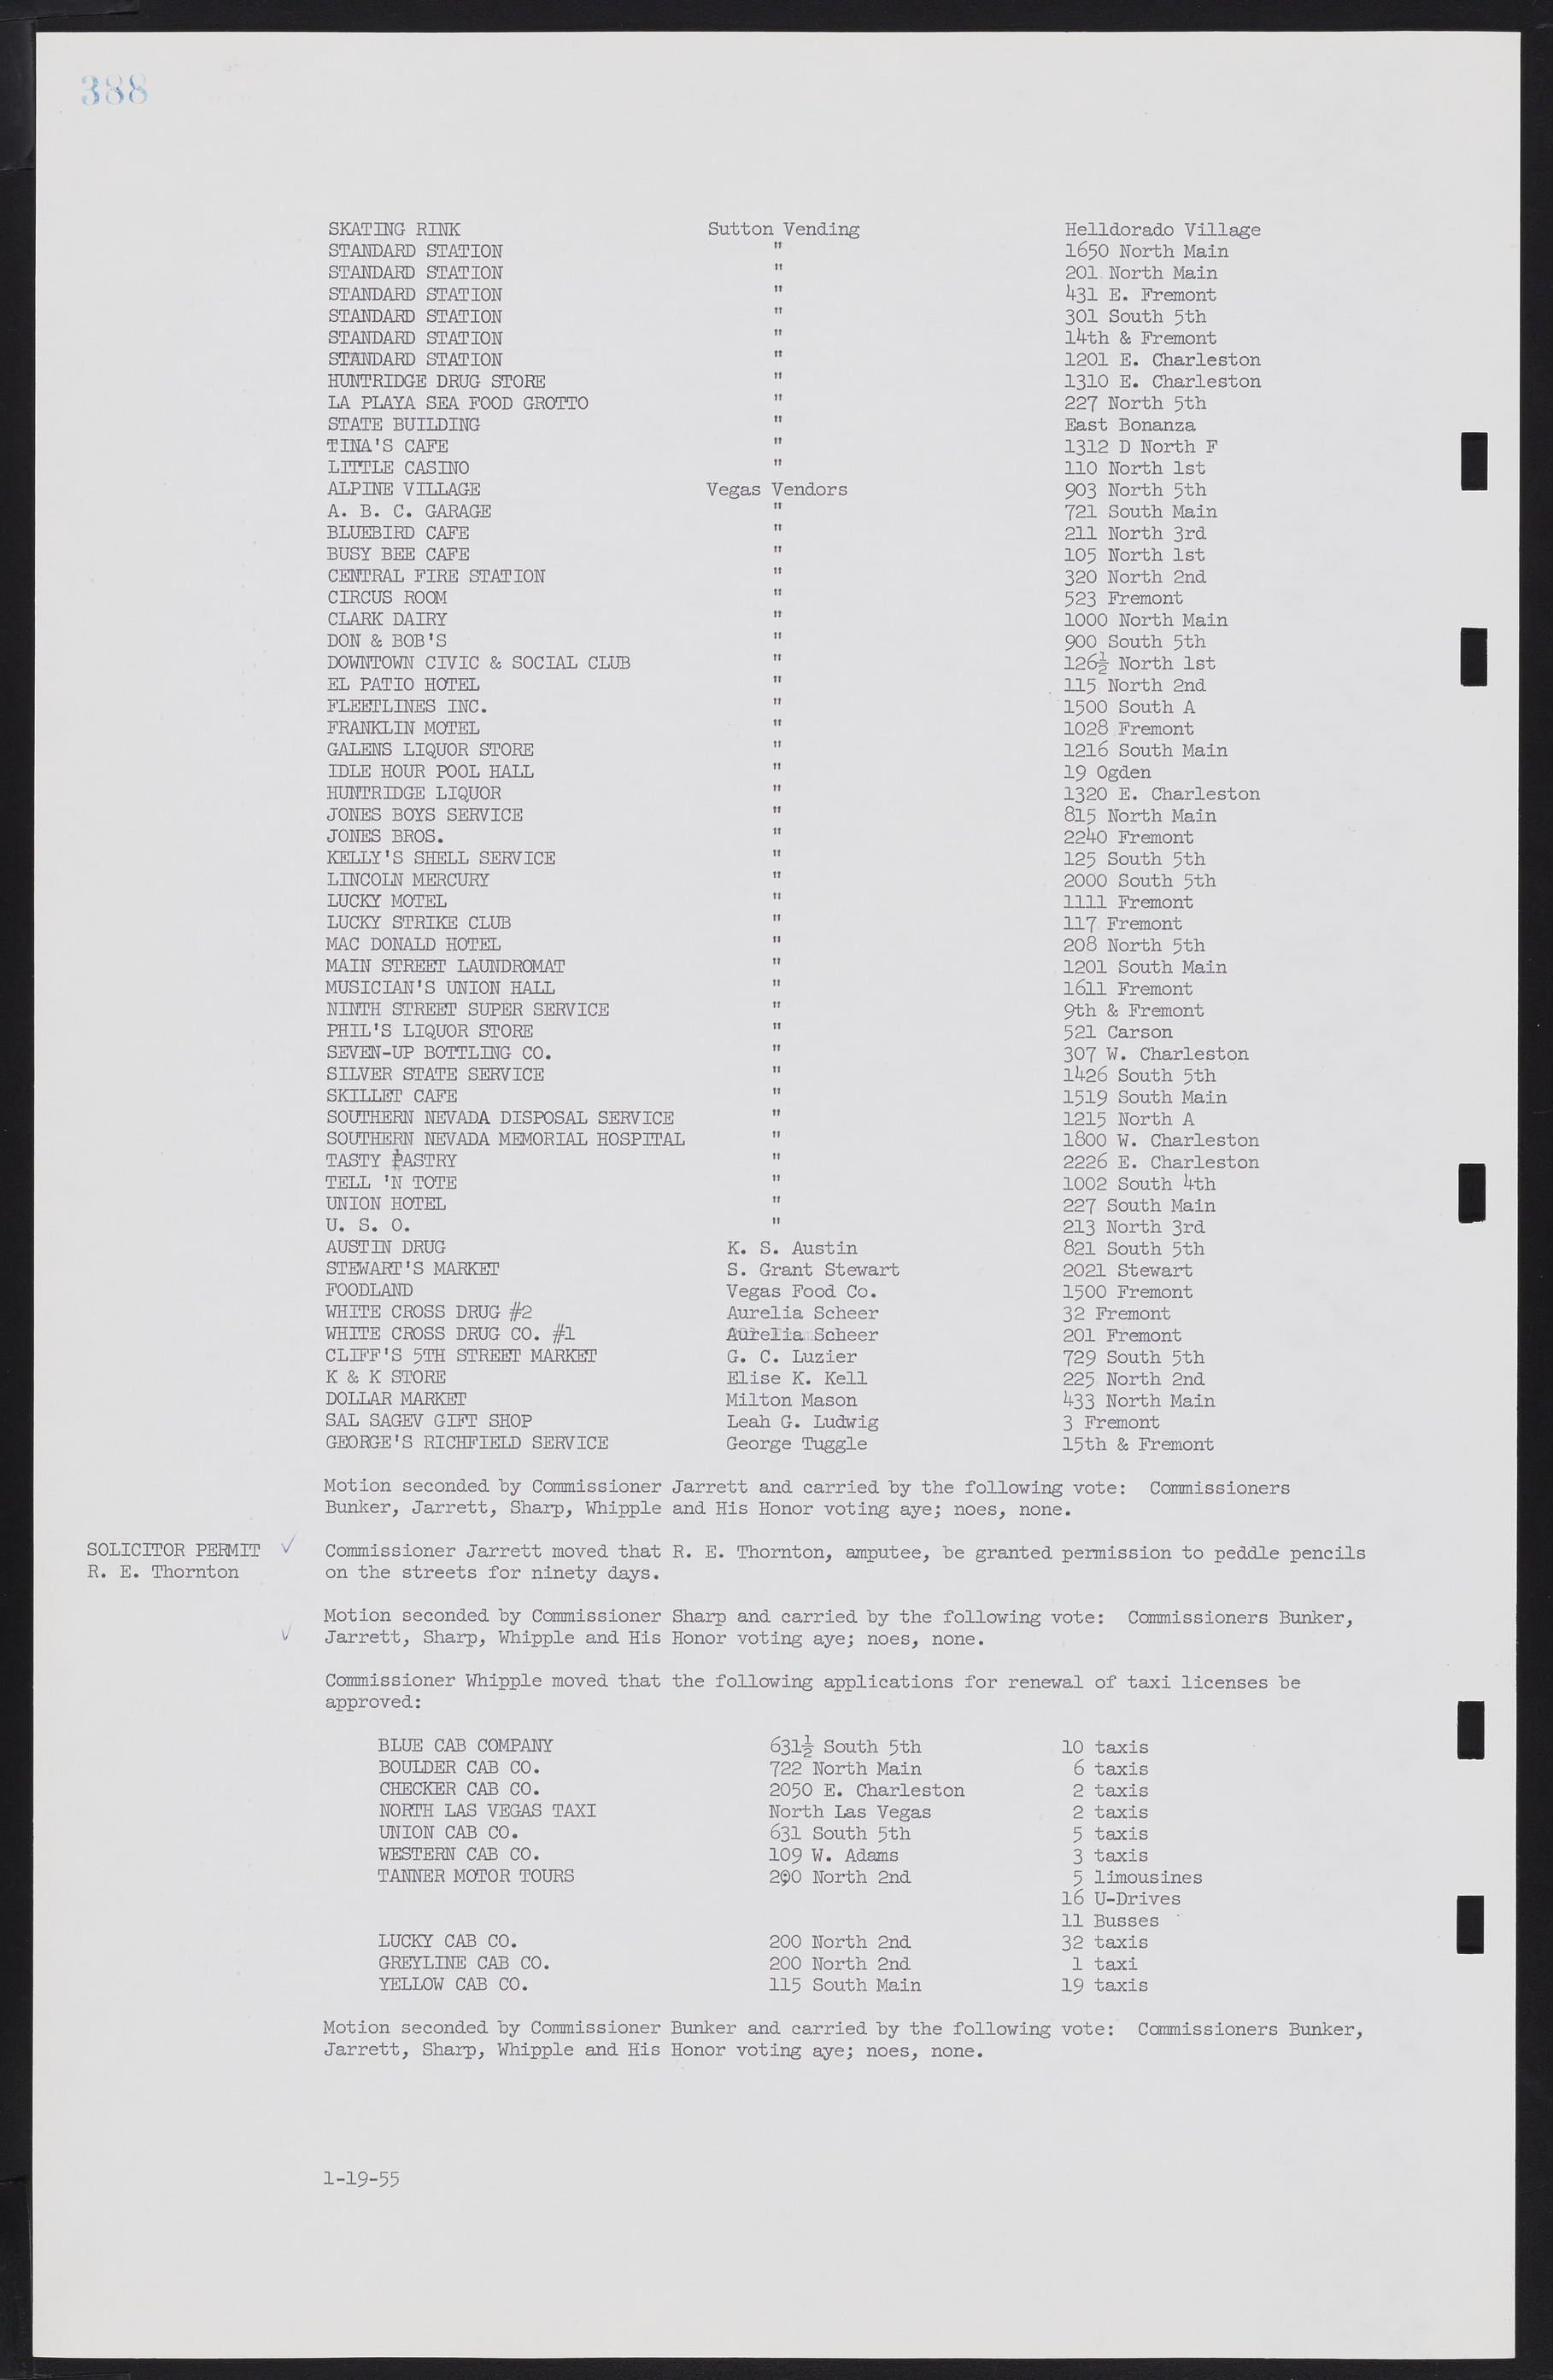 Las Vegas City Commission Minutes, February 17, 1954 to September 21, 1955, lvc000009-394